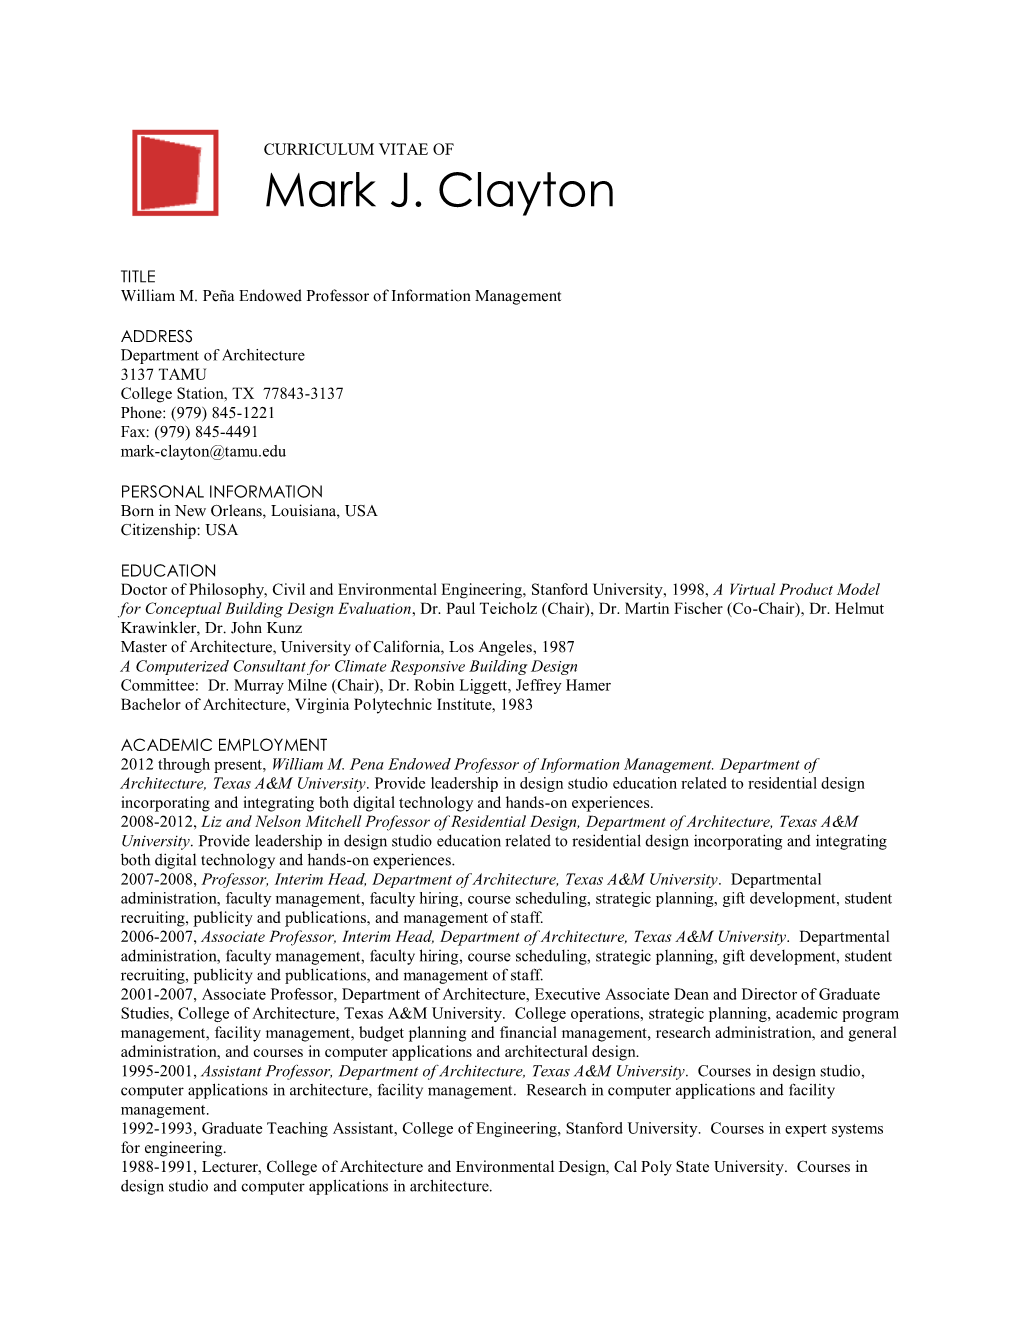 Curriculum Vitae of Mark J. Clayton